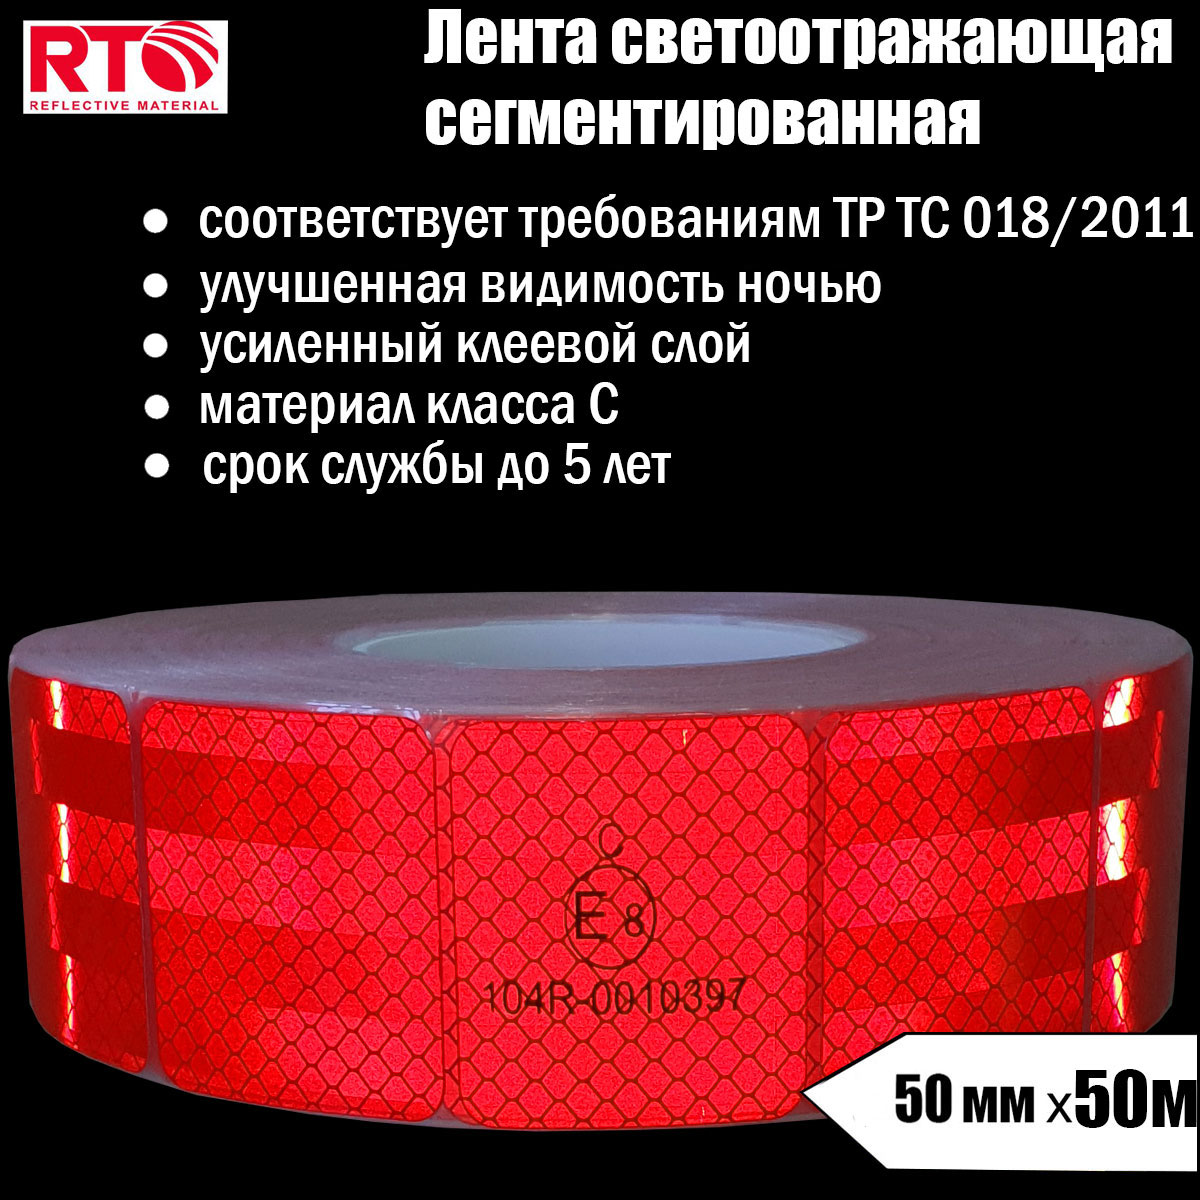 Лента светоотражающая сегментированная RTLITE RT-V104 для контурной маркировки, 50мм х 50м лента светоотражающая для контурной маркировки rtlite rt v104 50 8 мм х 10 м желтая